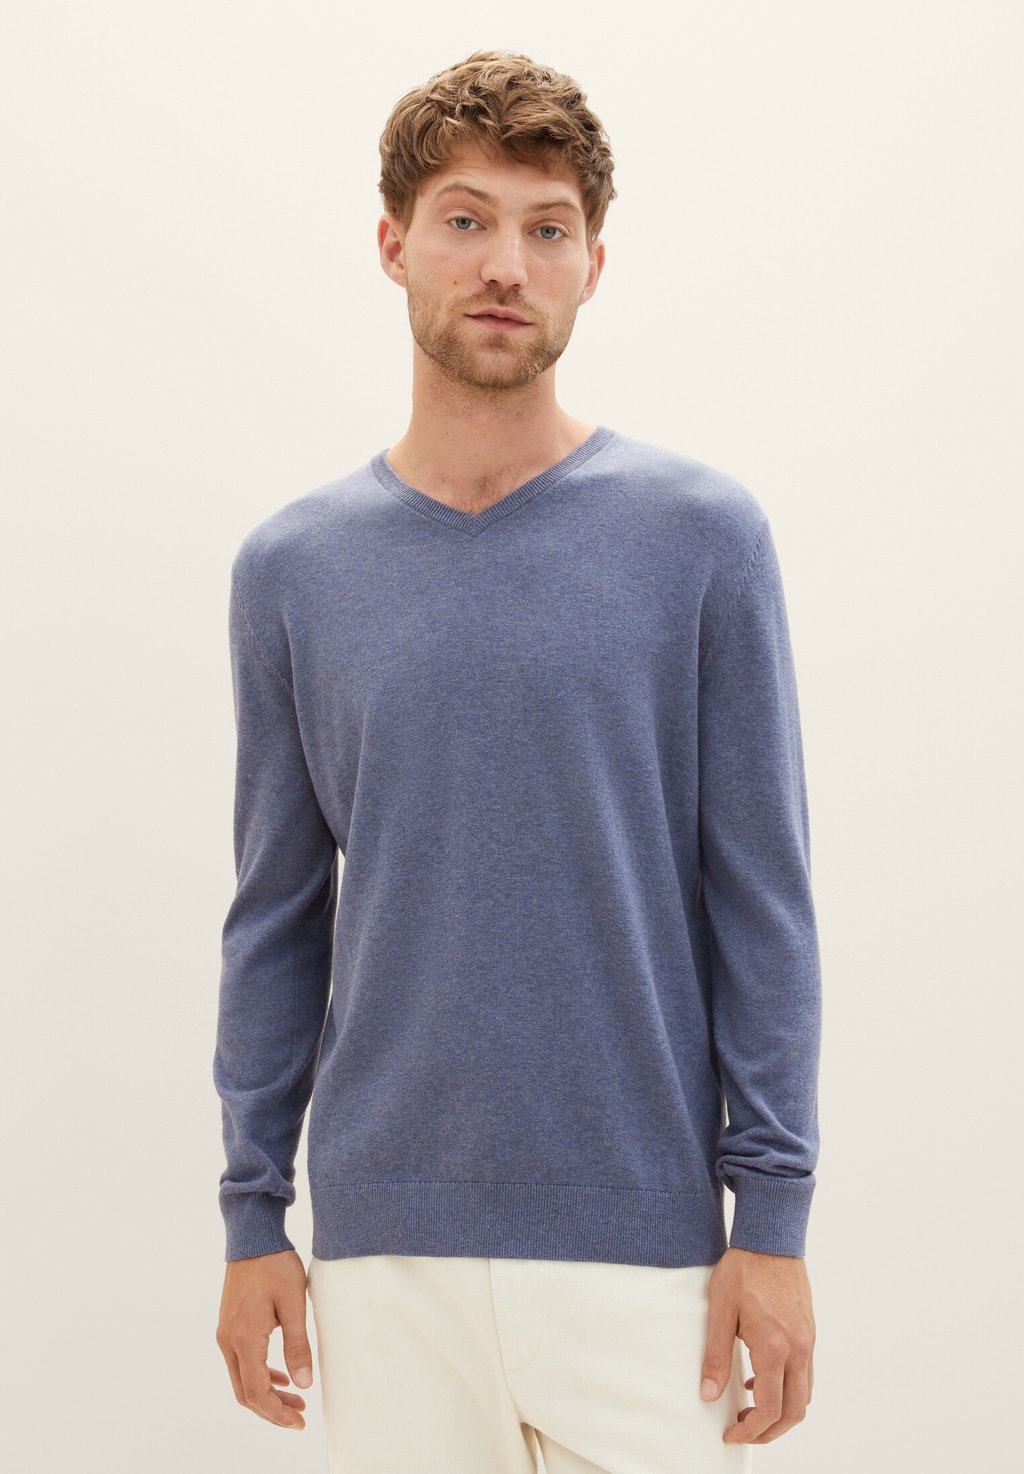 Свитер BASIC V NECK TOM TAILOR, винтажный индиго синий меланж свитер tom tailor 1012820 v neck синий